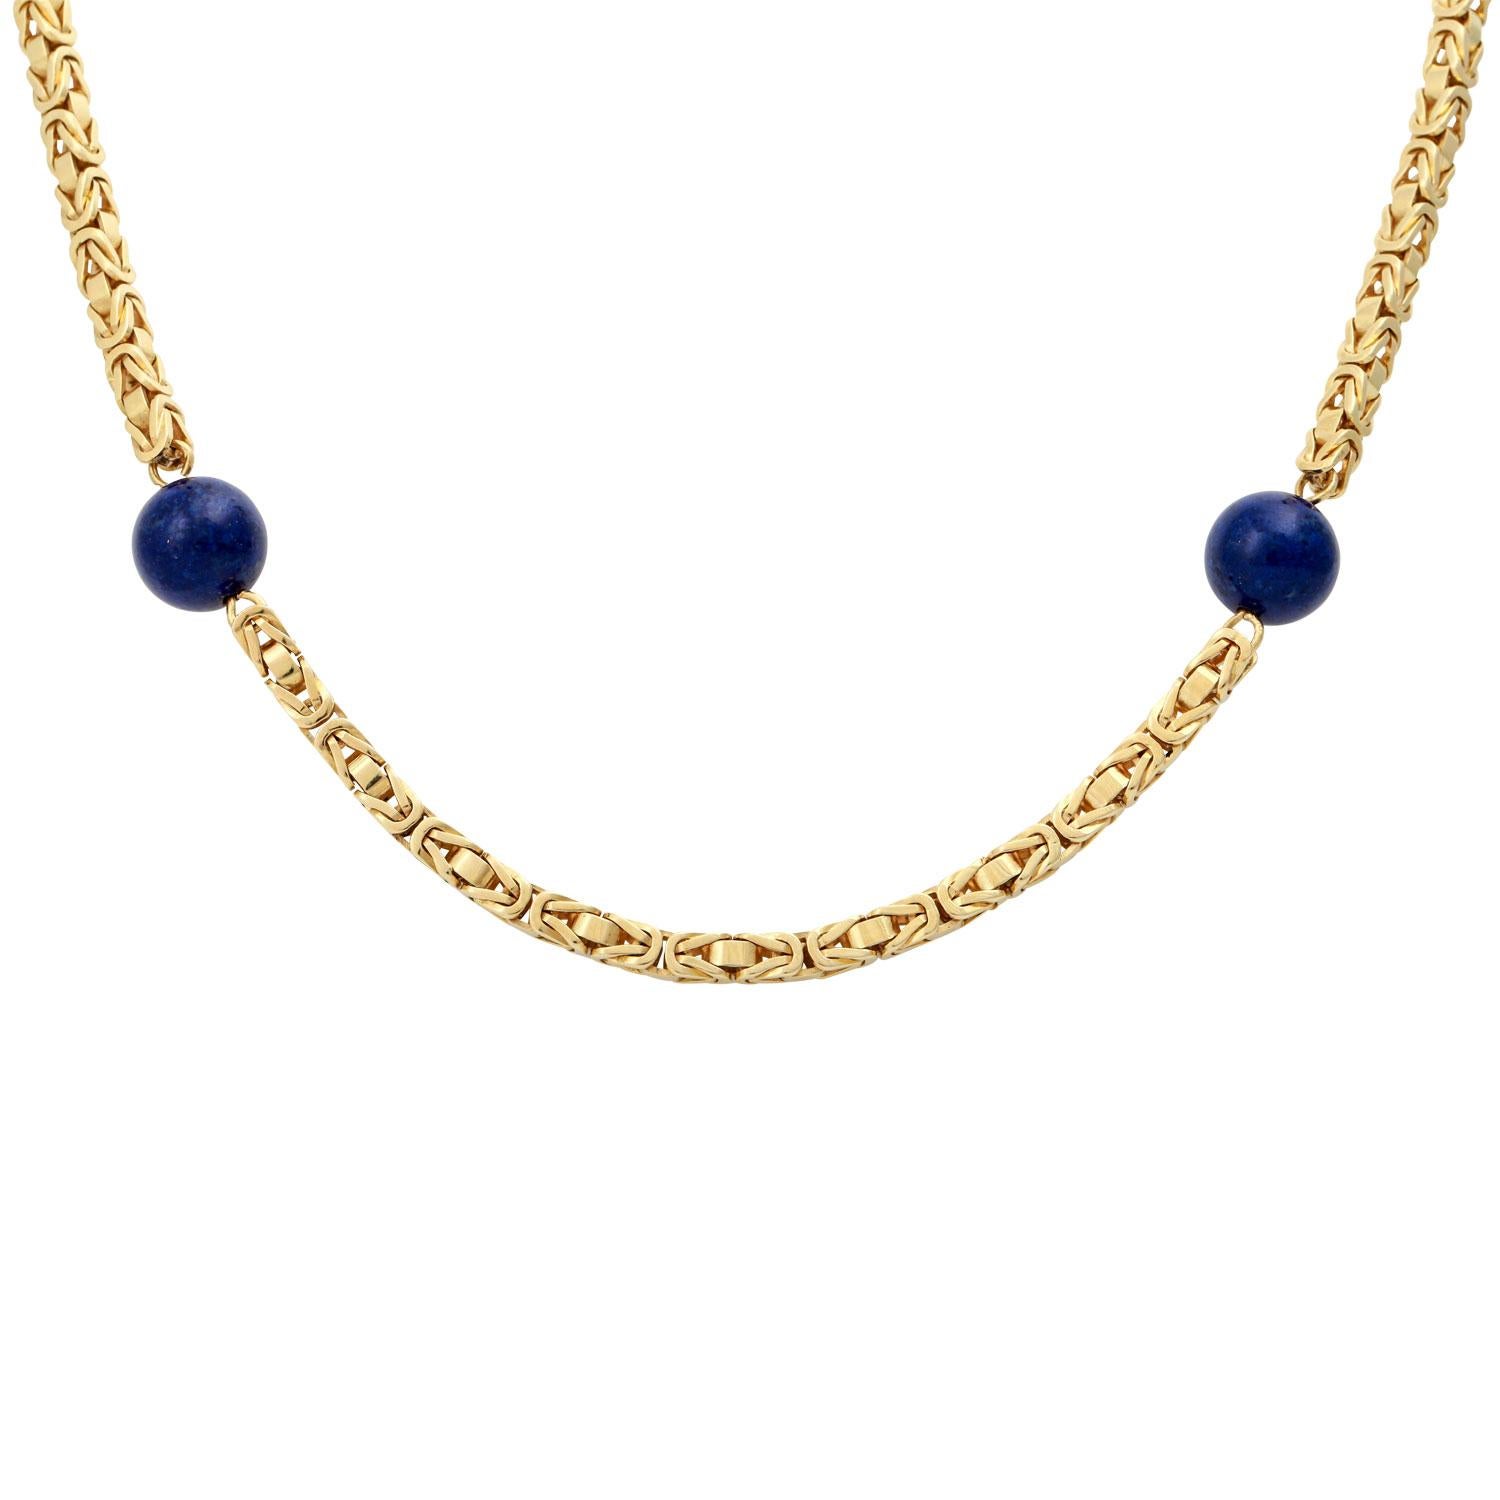 Byzantine chain with 6 lapis lazuli beads. GG 18K. L. approx. 60 cm. Endless!